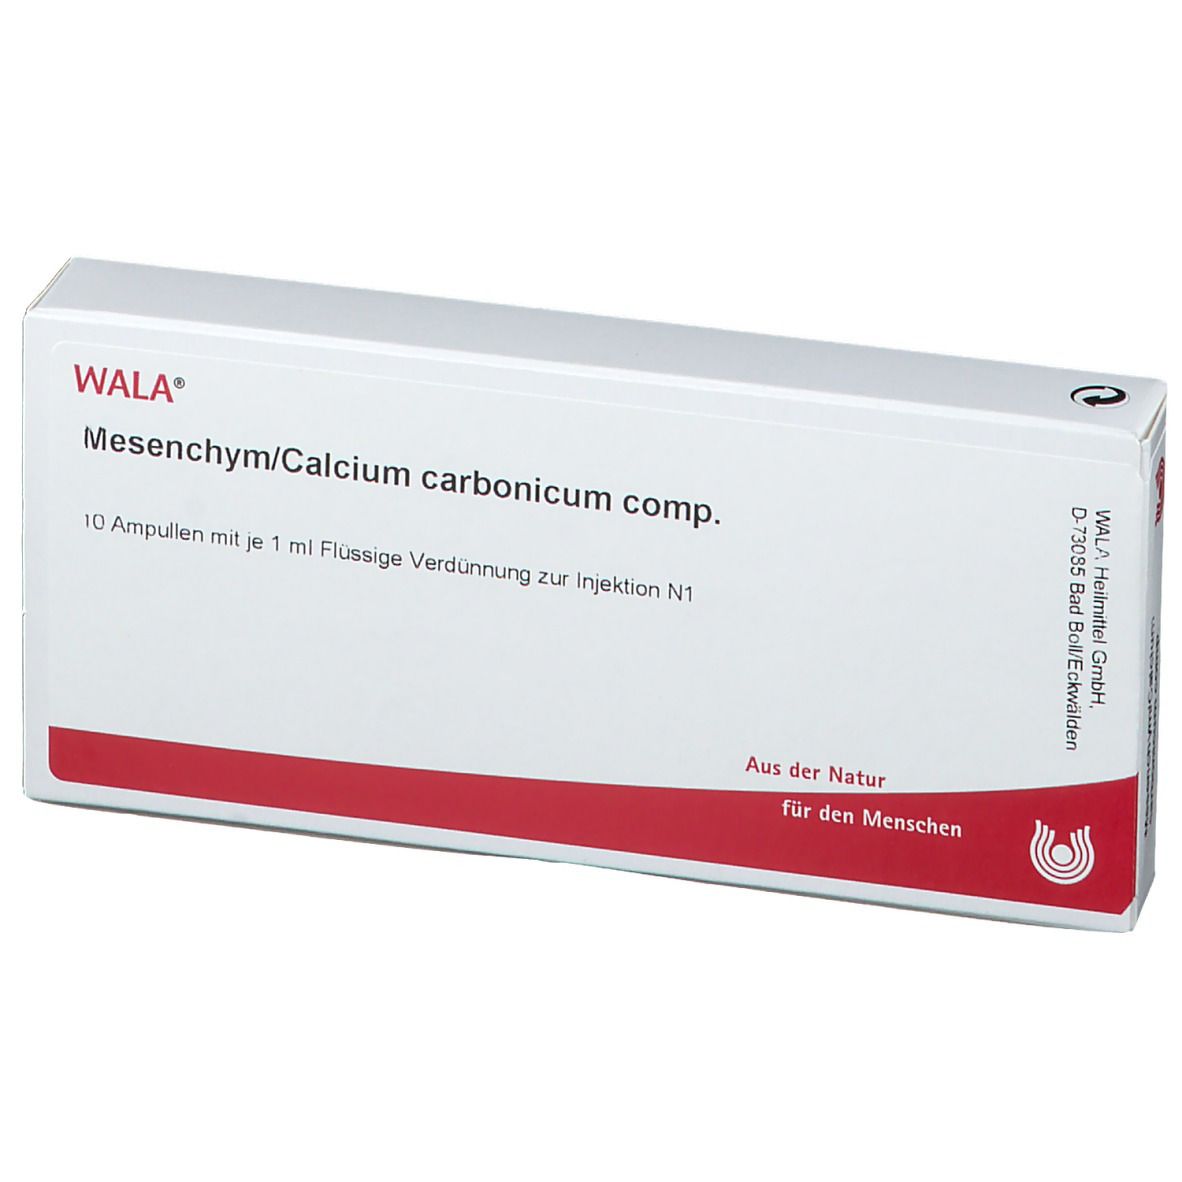 WALA® MESENCHYM/ Calcium Carb. Comp. Amp.